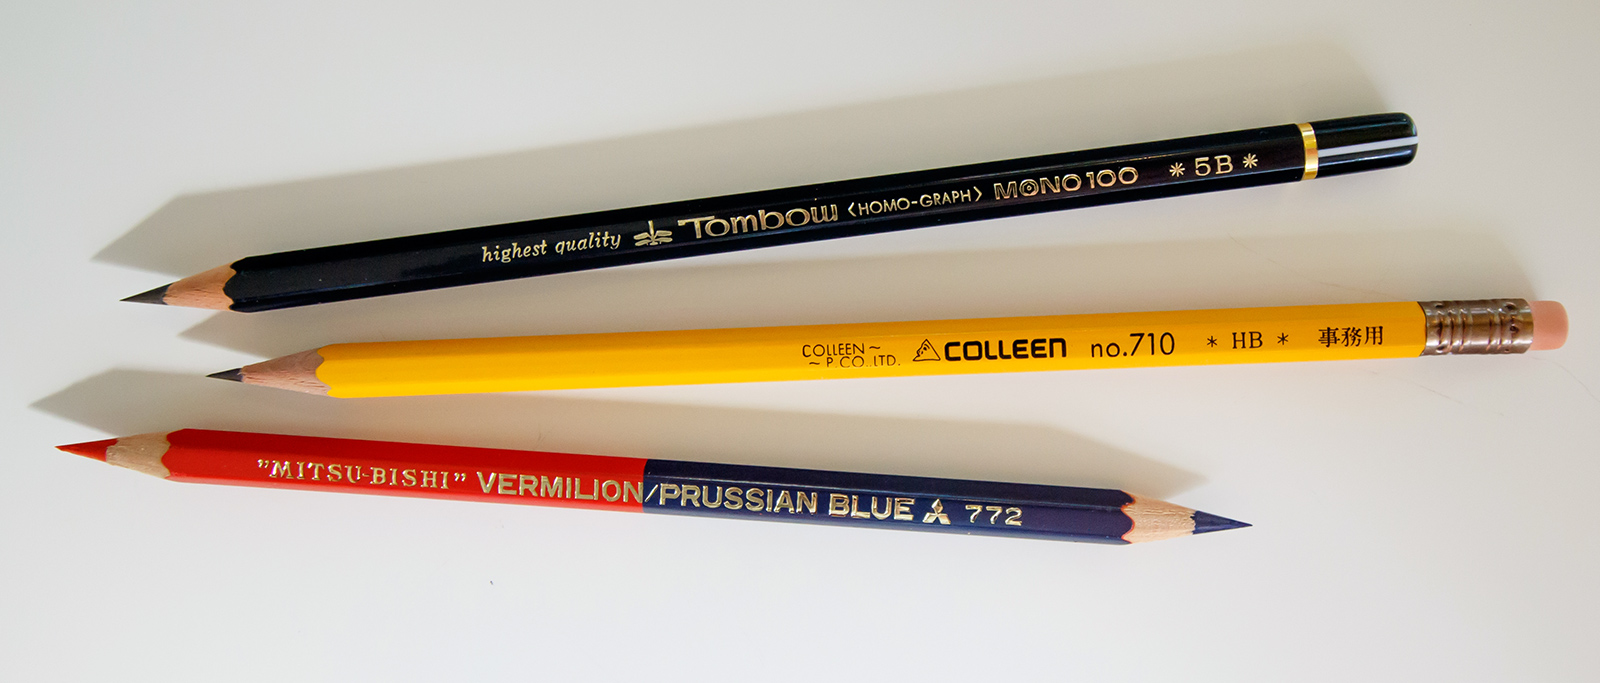 Tombow, Colleen, and Mitsubishi vintage pencils